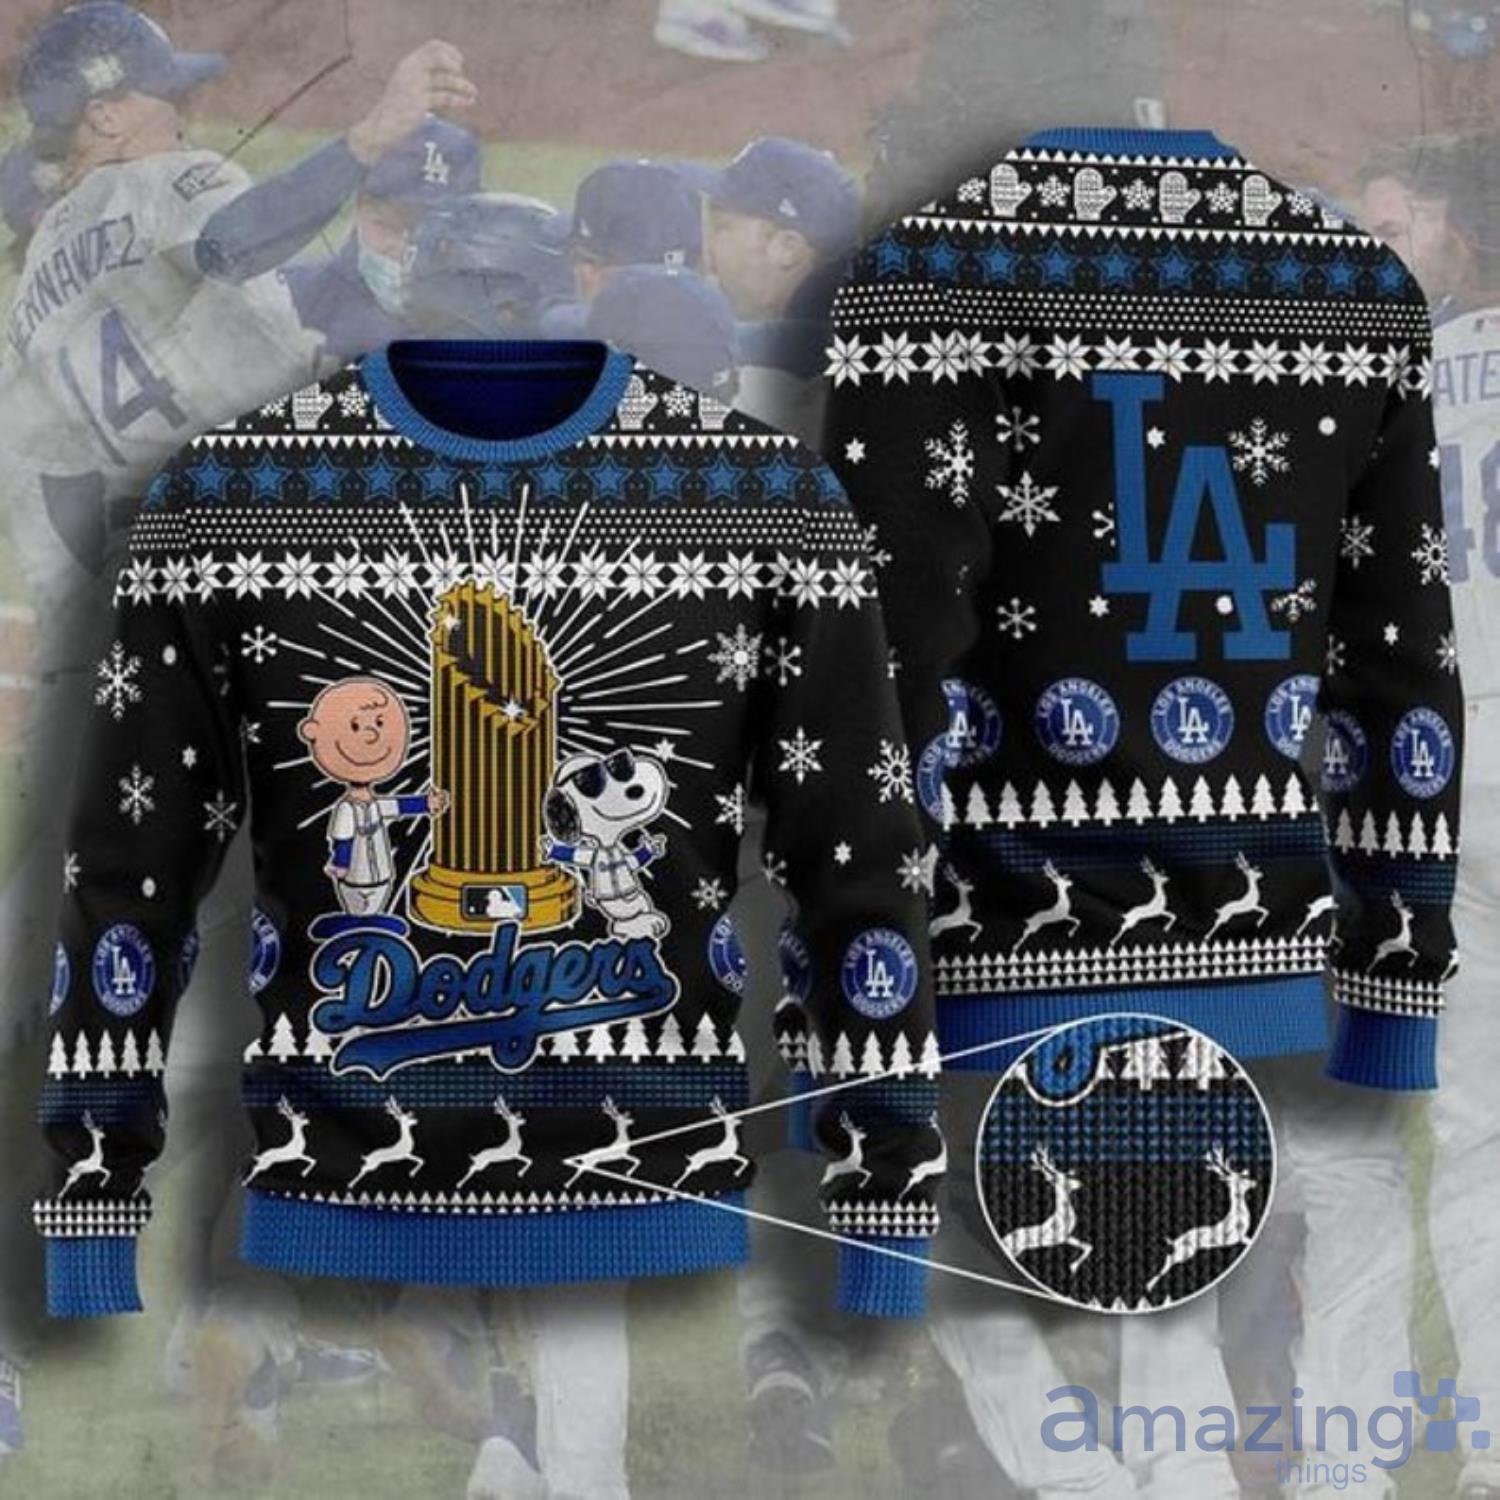 LA Dodgers Ugly Christmas Sweater